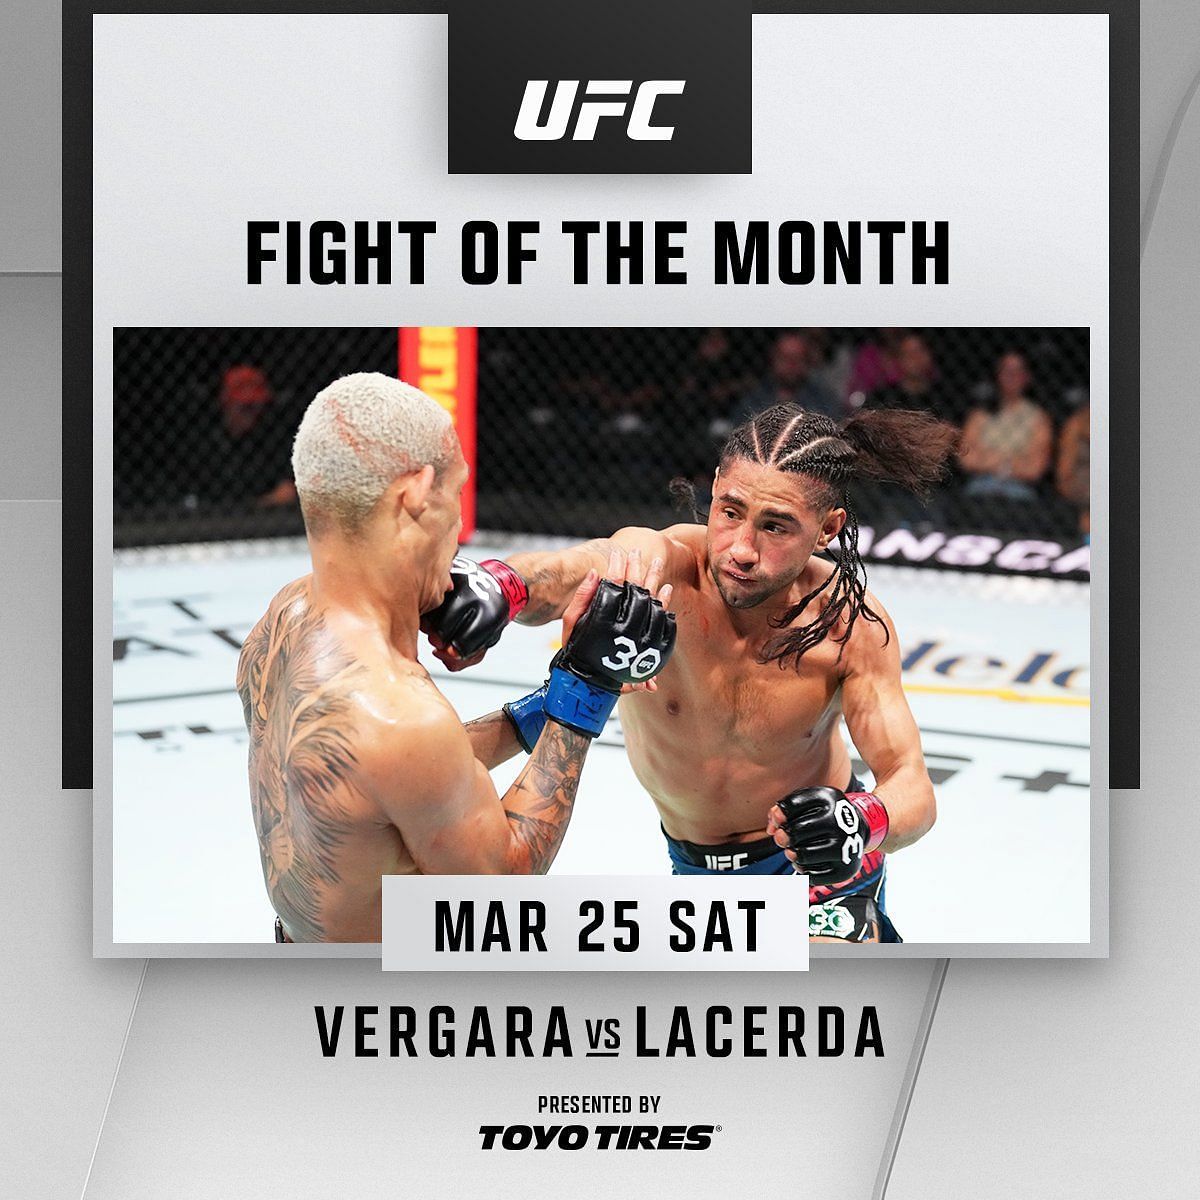 CJ Vergara vs. Daniel Lacerda &ndash; UFC San Antonio